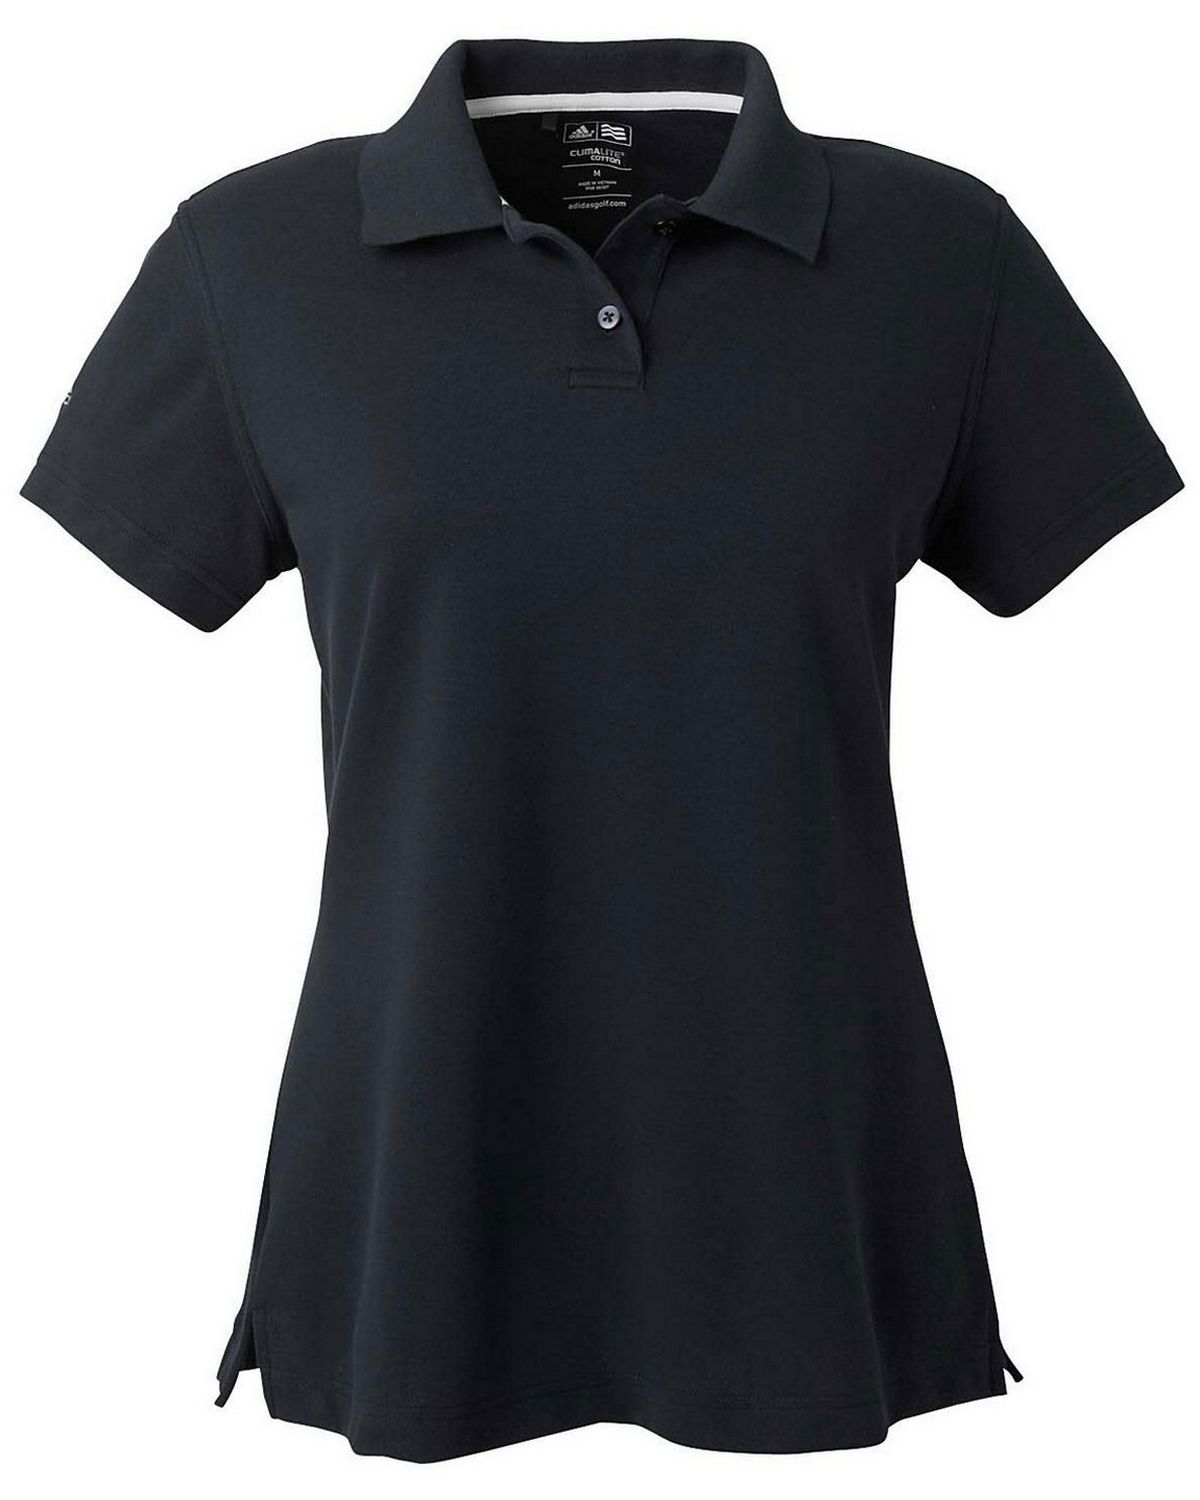 Adidas Golf A85 Ladies’ ClimaLite Tour Pique Short-Sleeve Polo